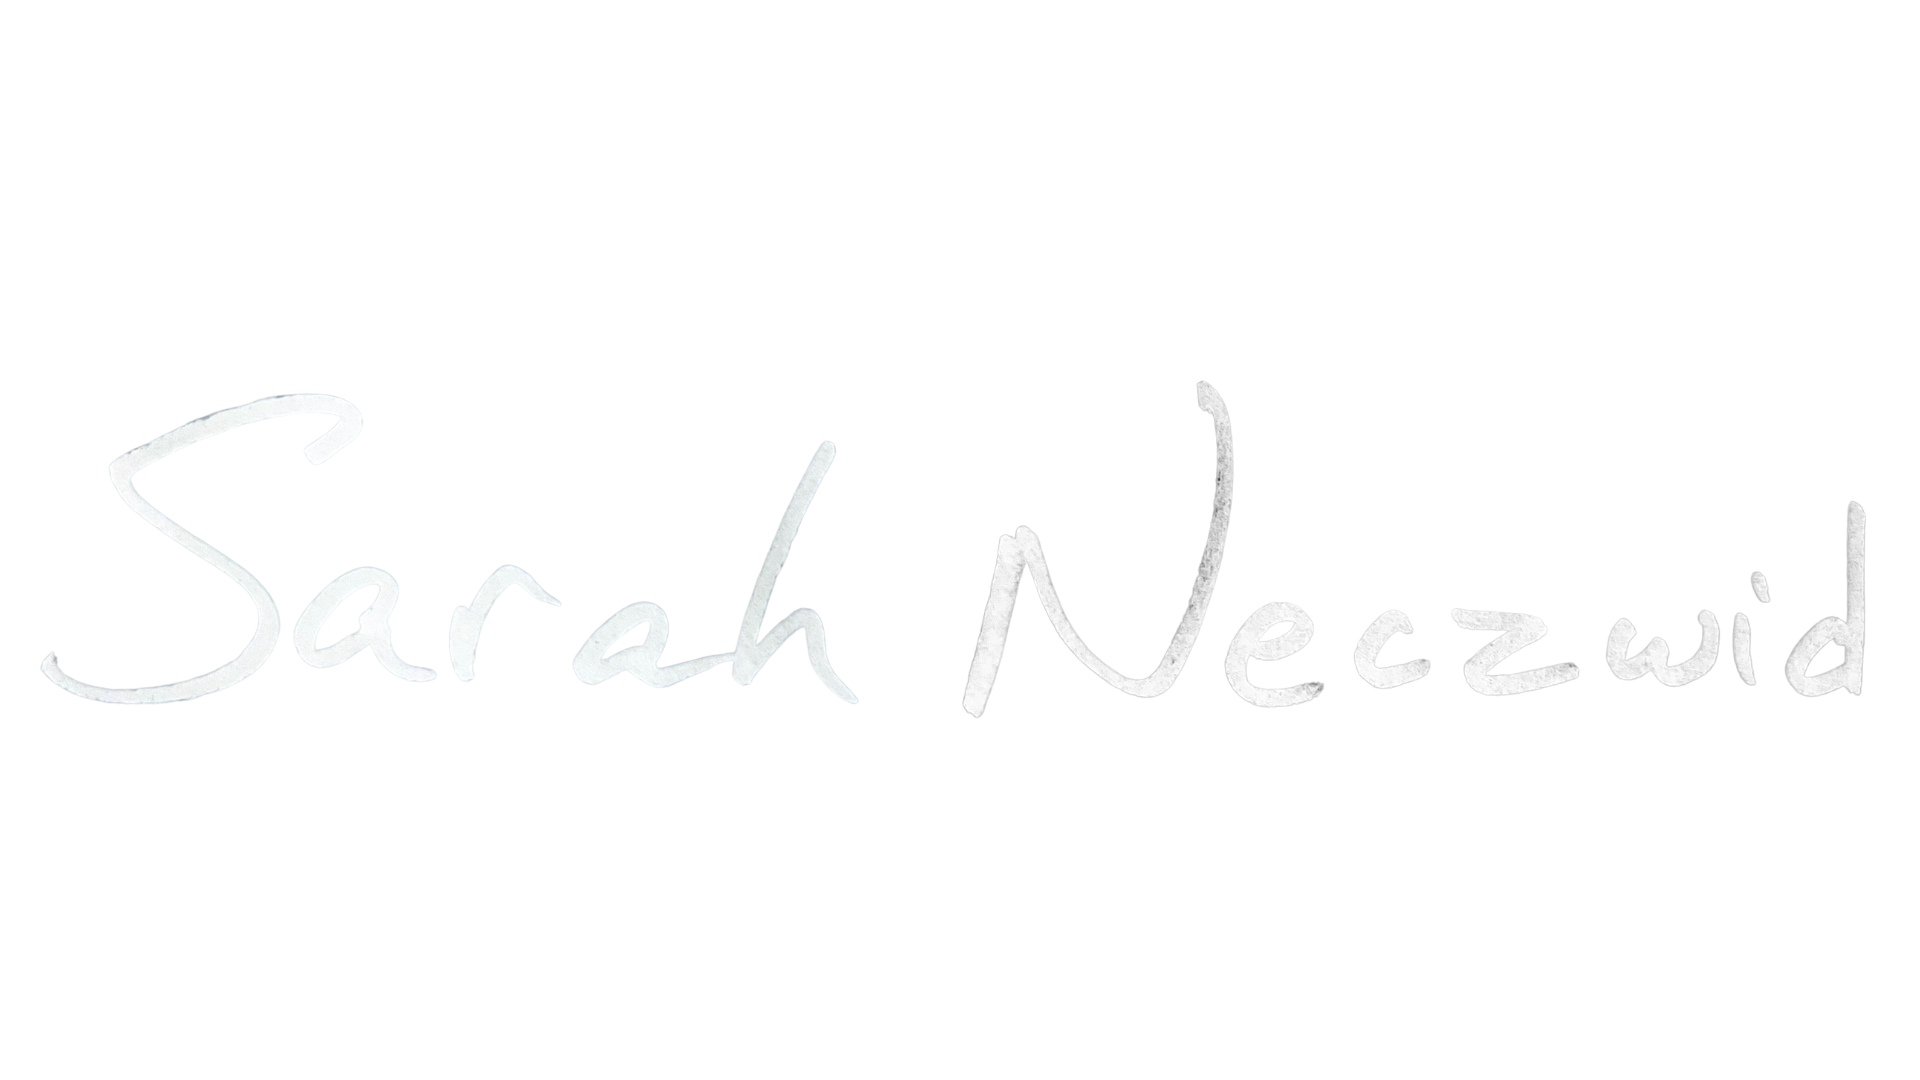 Sarah Neczwid